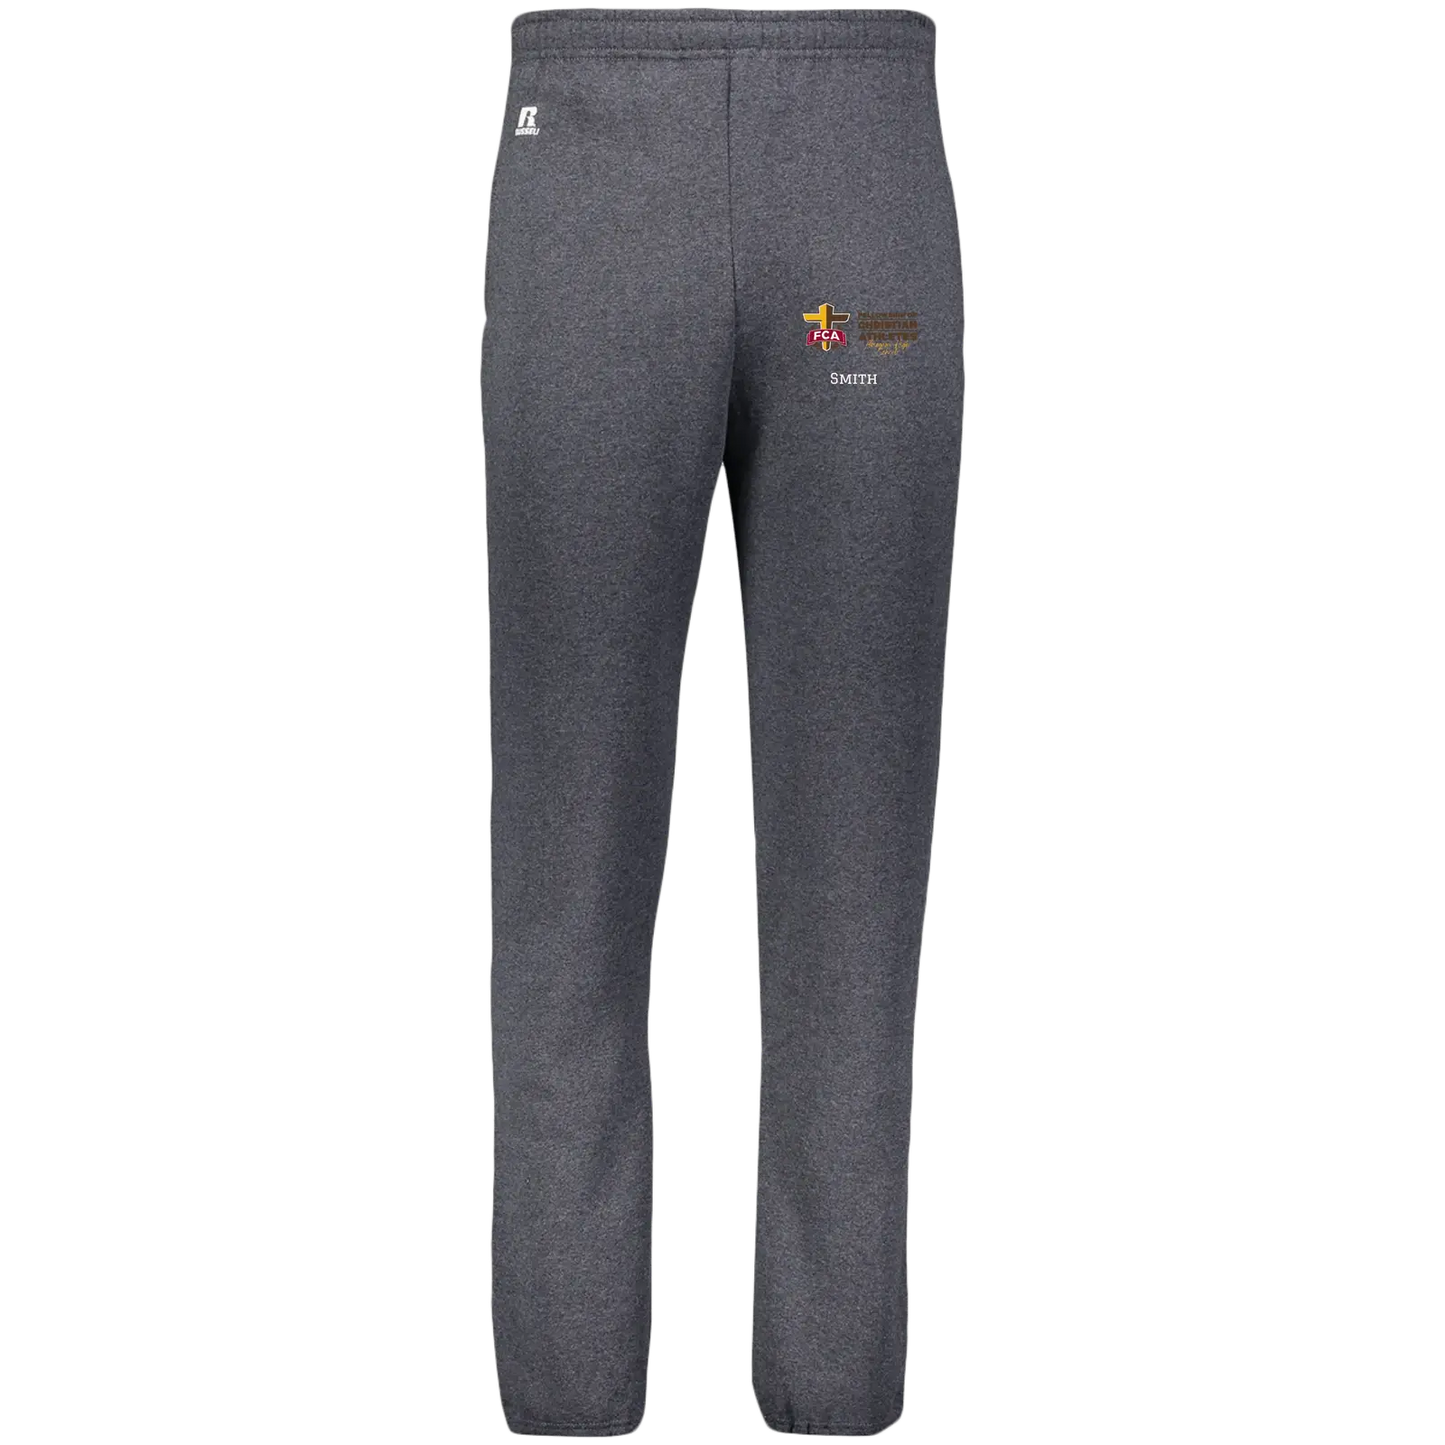 Absegami FCA Pants - Shore Break Designs - Customizer